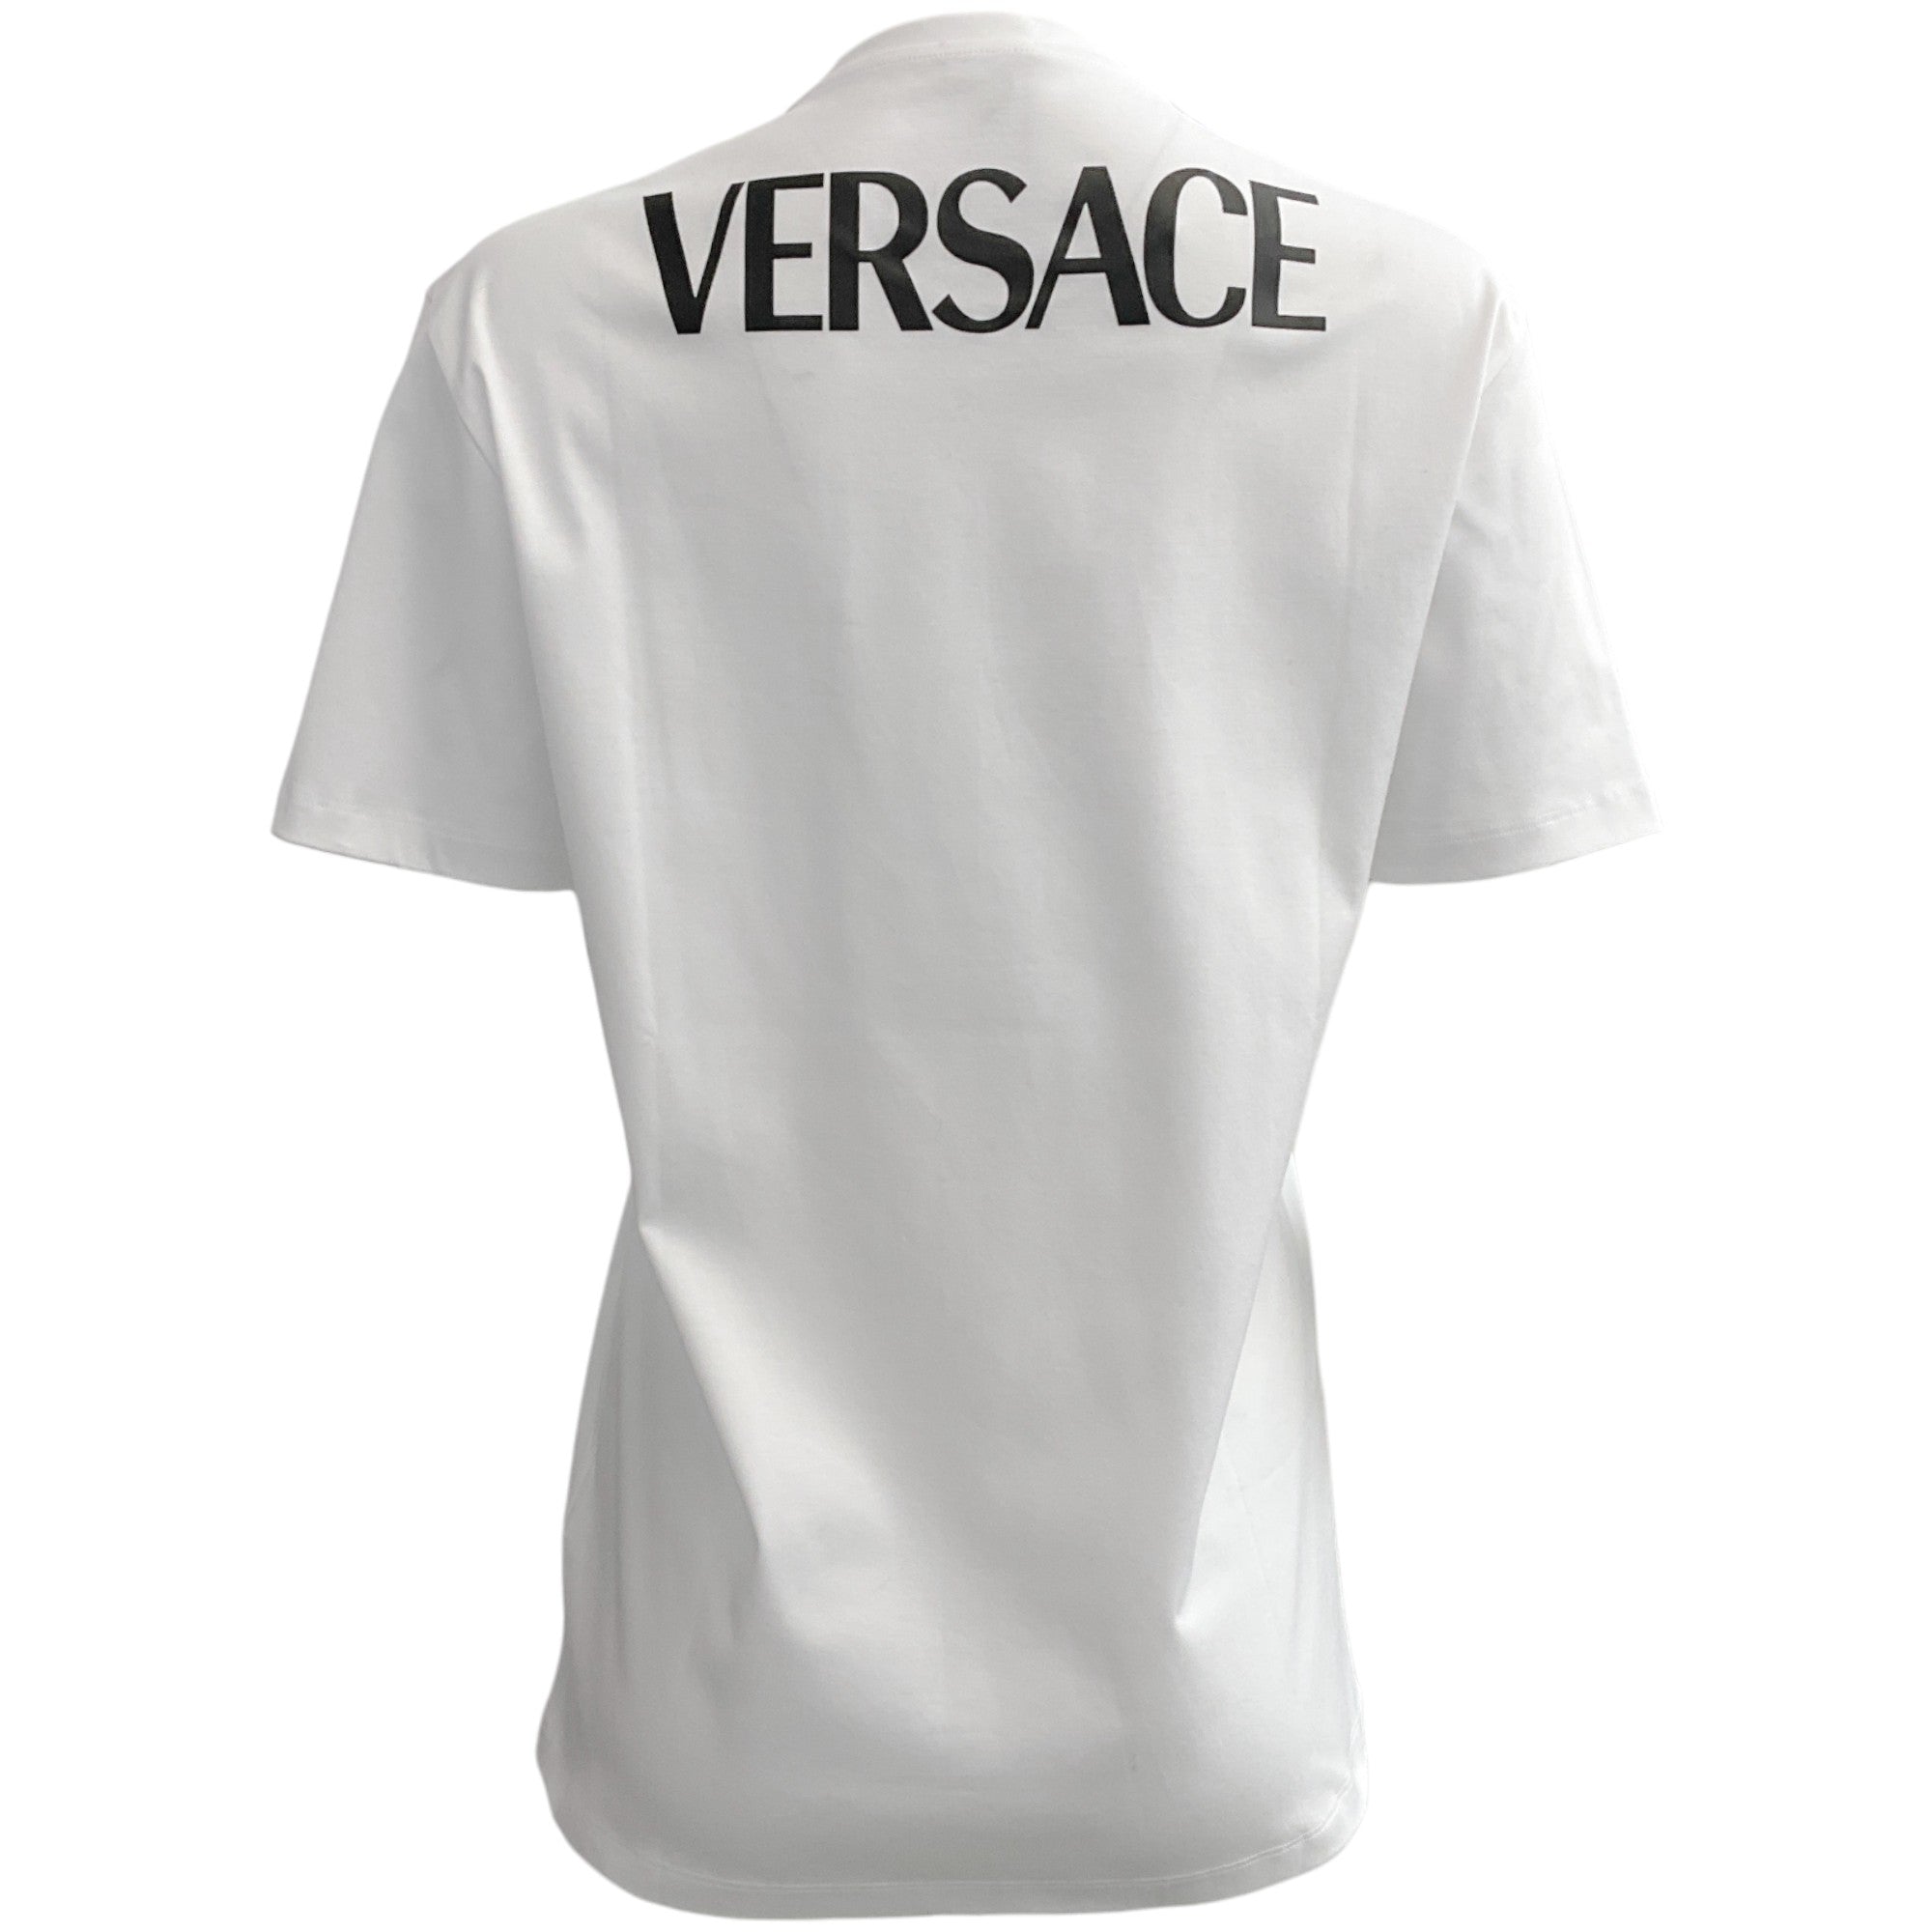 Versace White Cotton Happy Face Logo Short Sleeve Top